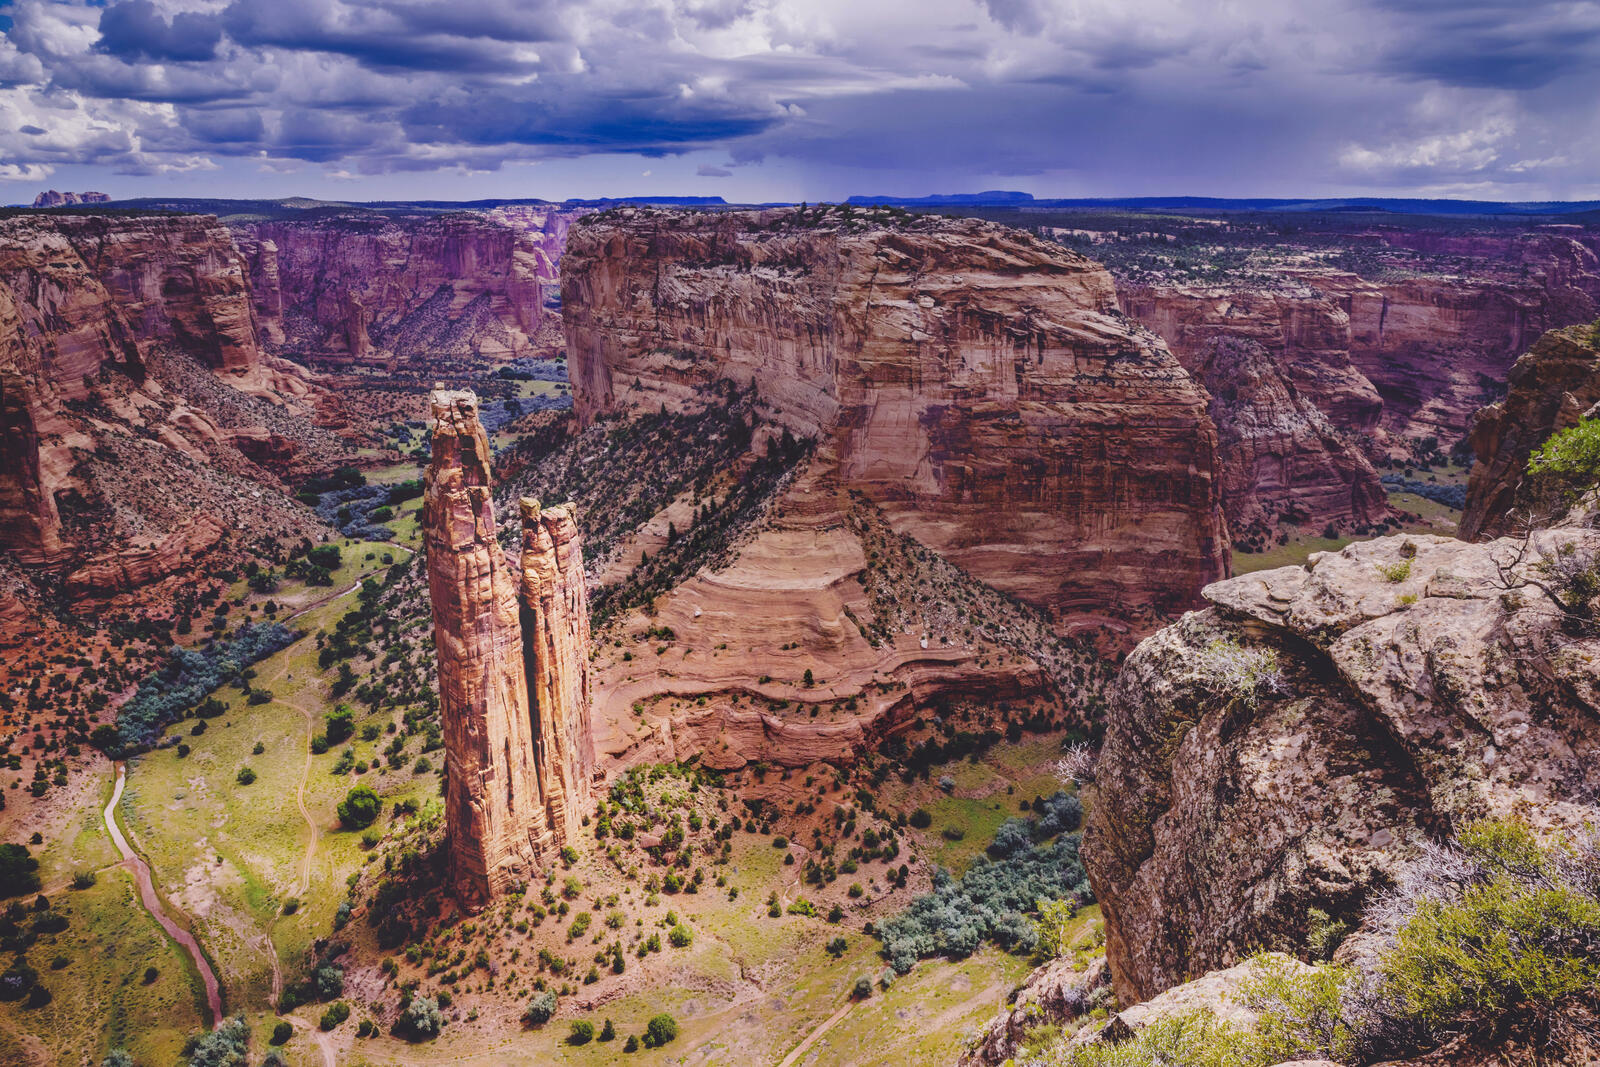 Wallpapers Spider Rock Overlook Canyon de Chelly Arizona on the desktop